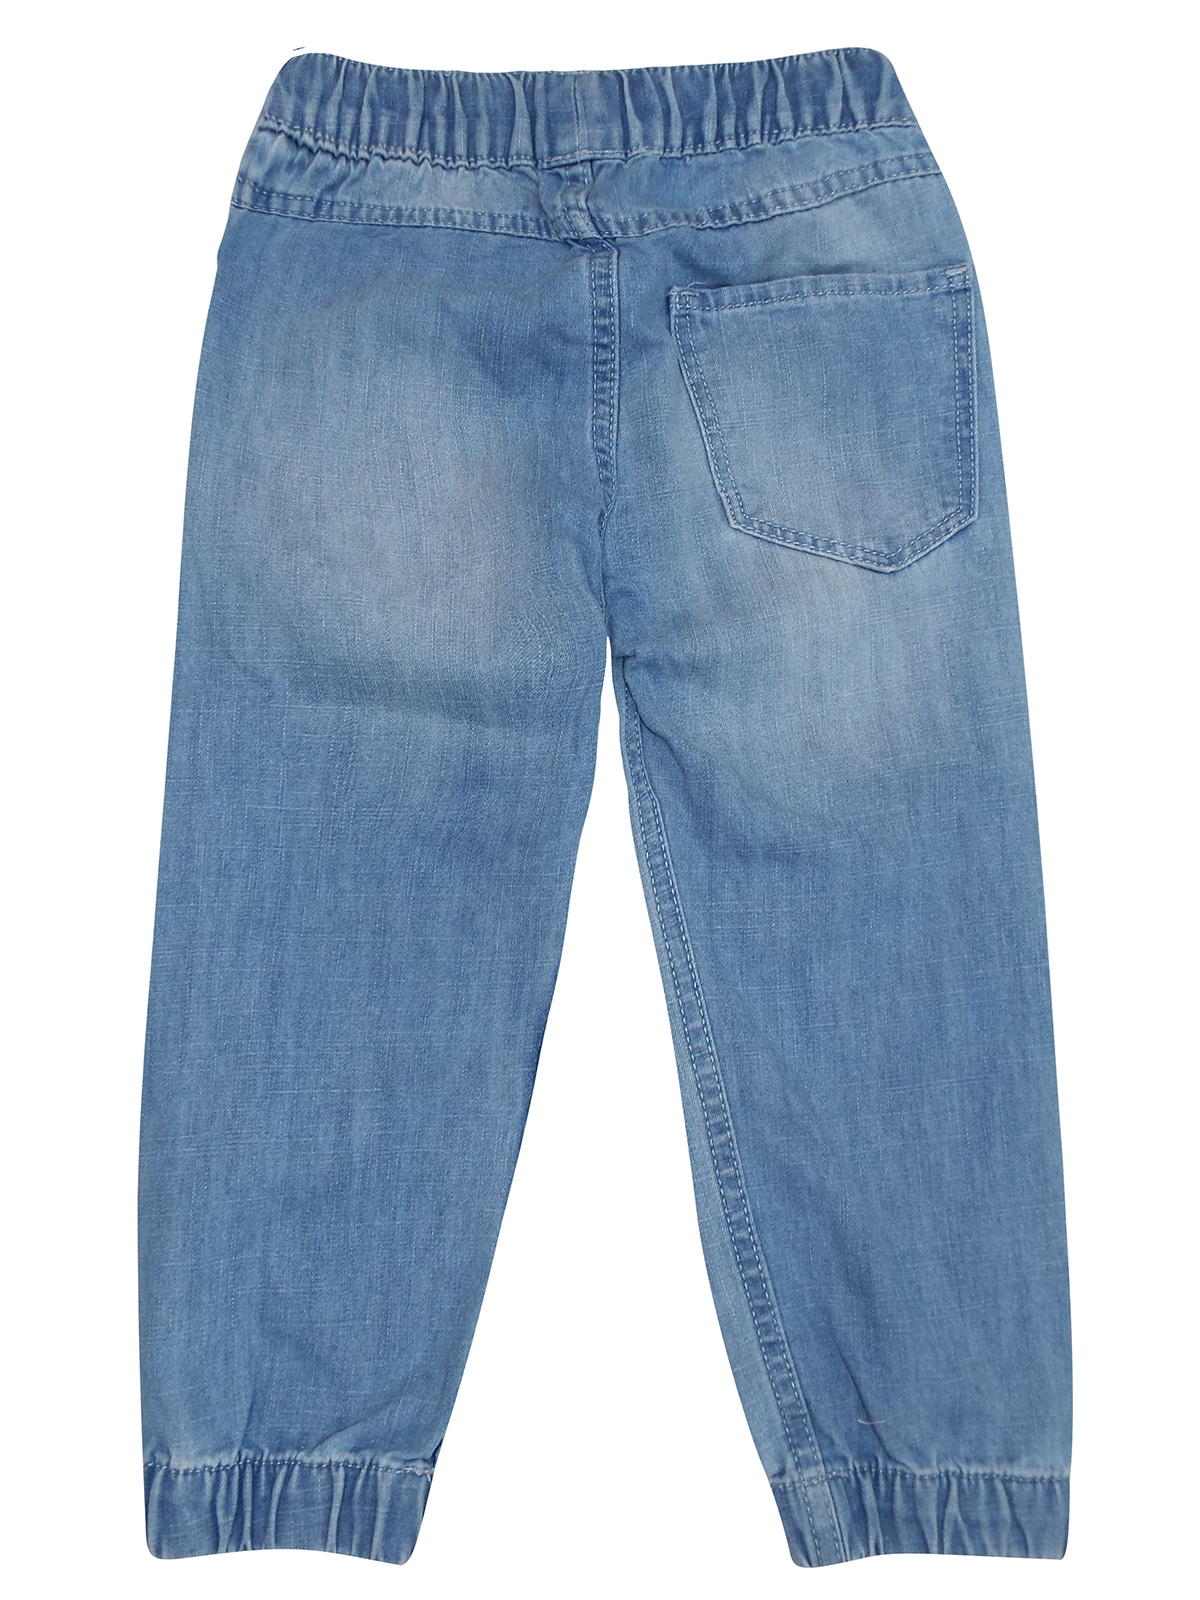 H&M LIGHT-BLUE Boys Denim Jogger Jeans - Age 2/3Y to 6/7Y